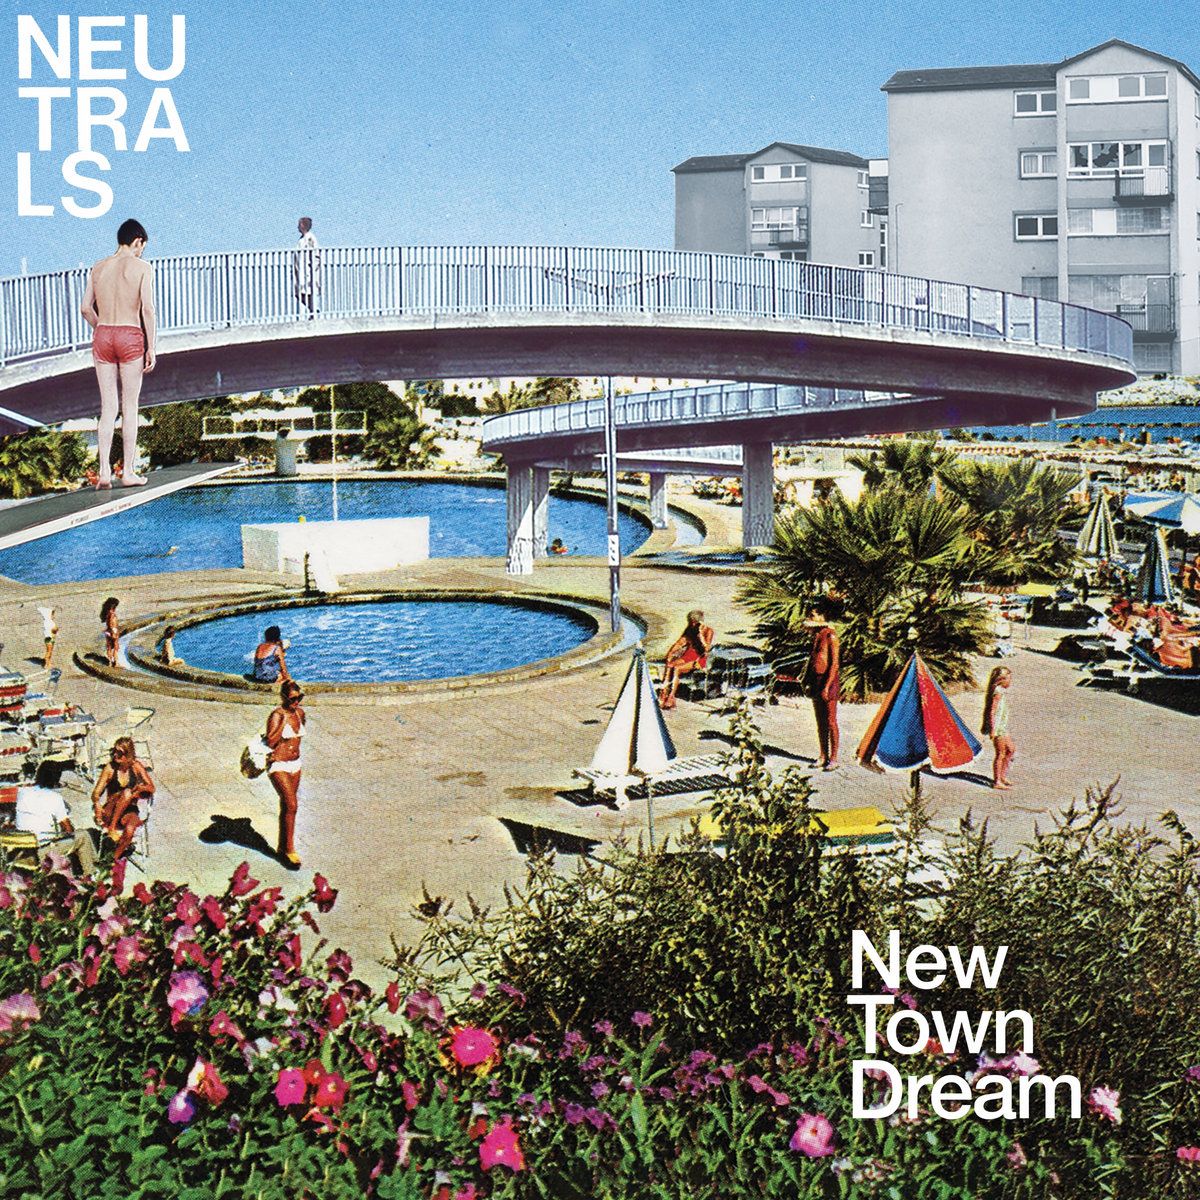 The Neutrals / 'New Town Dream'